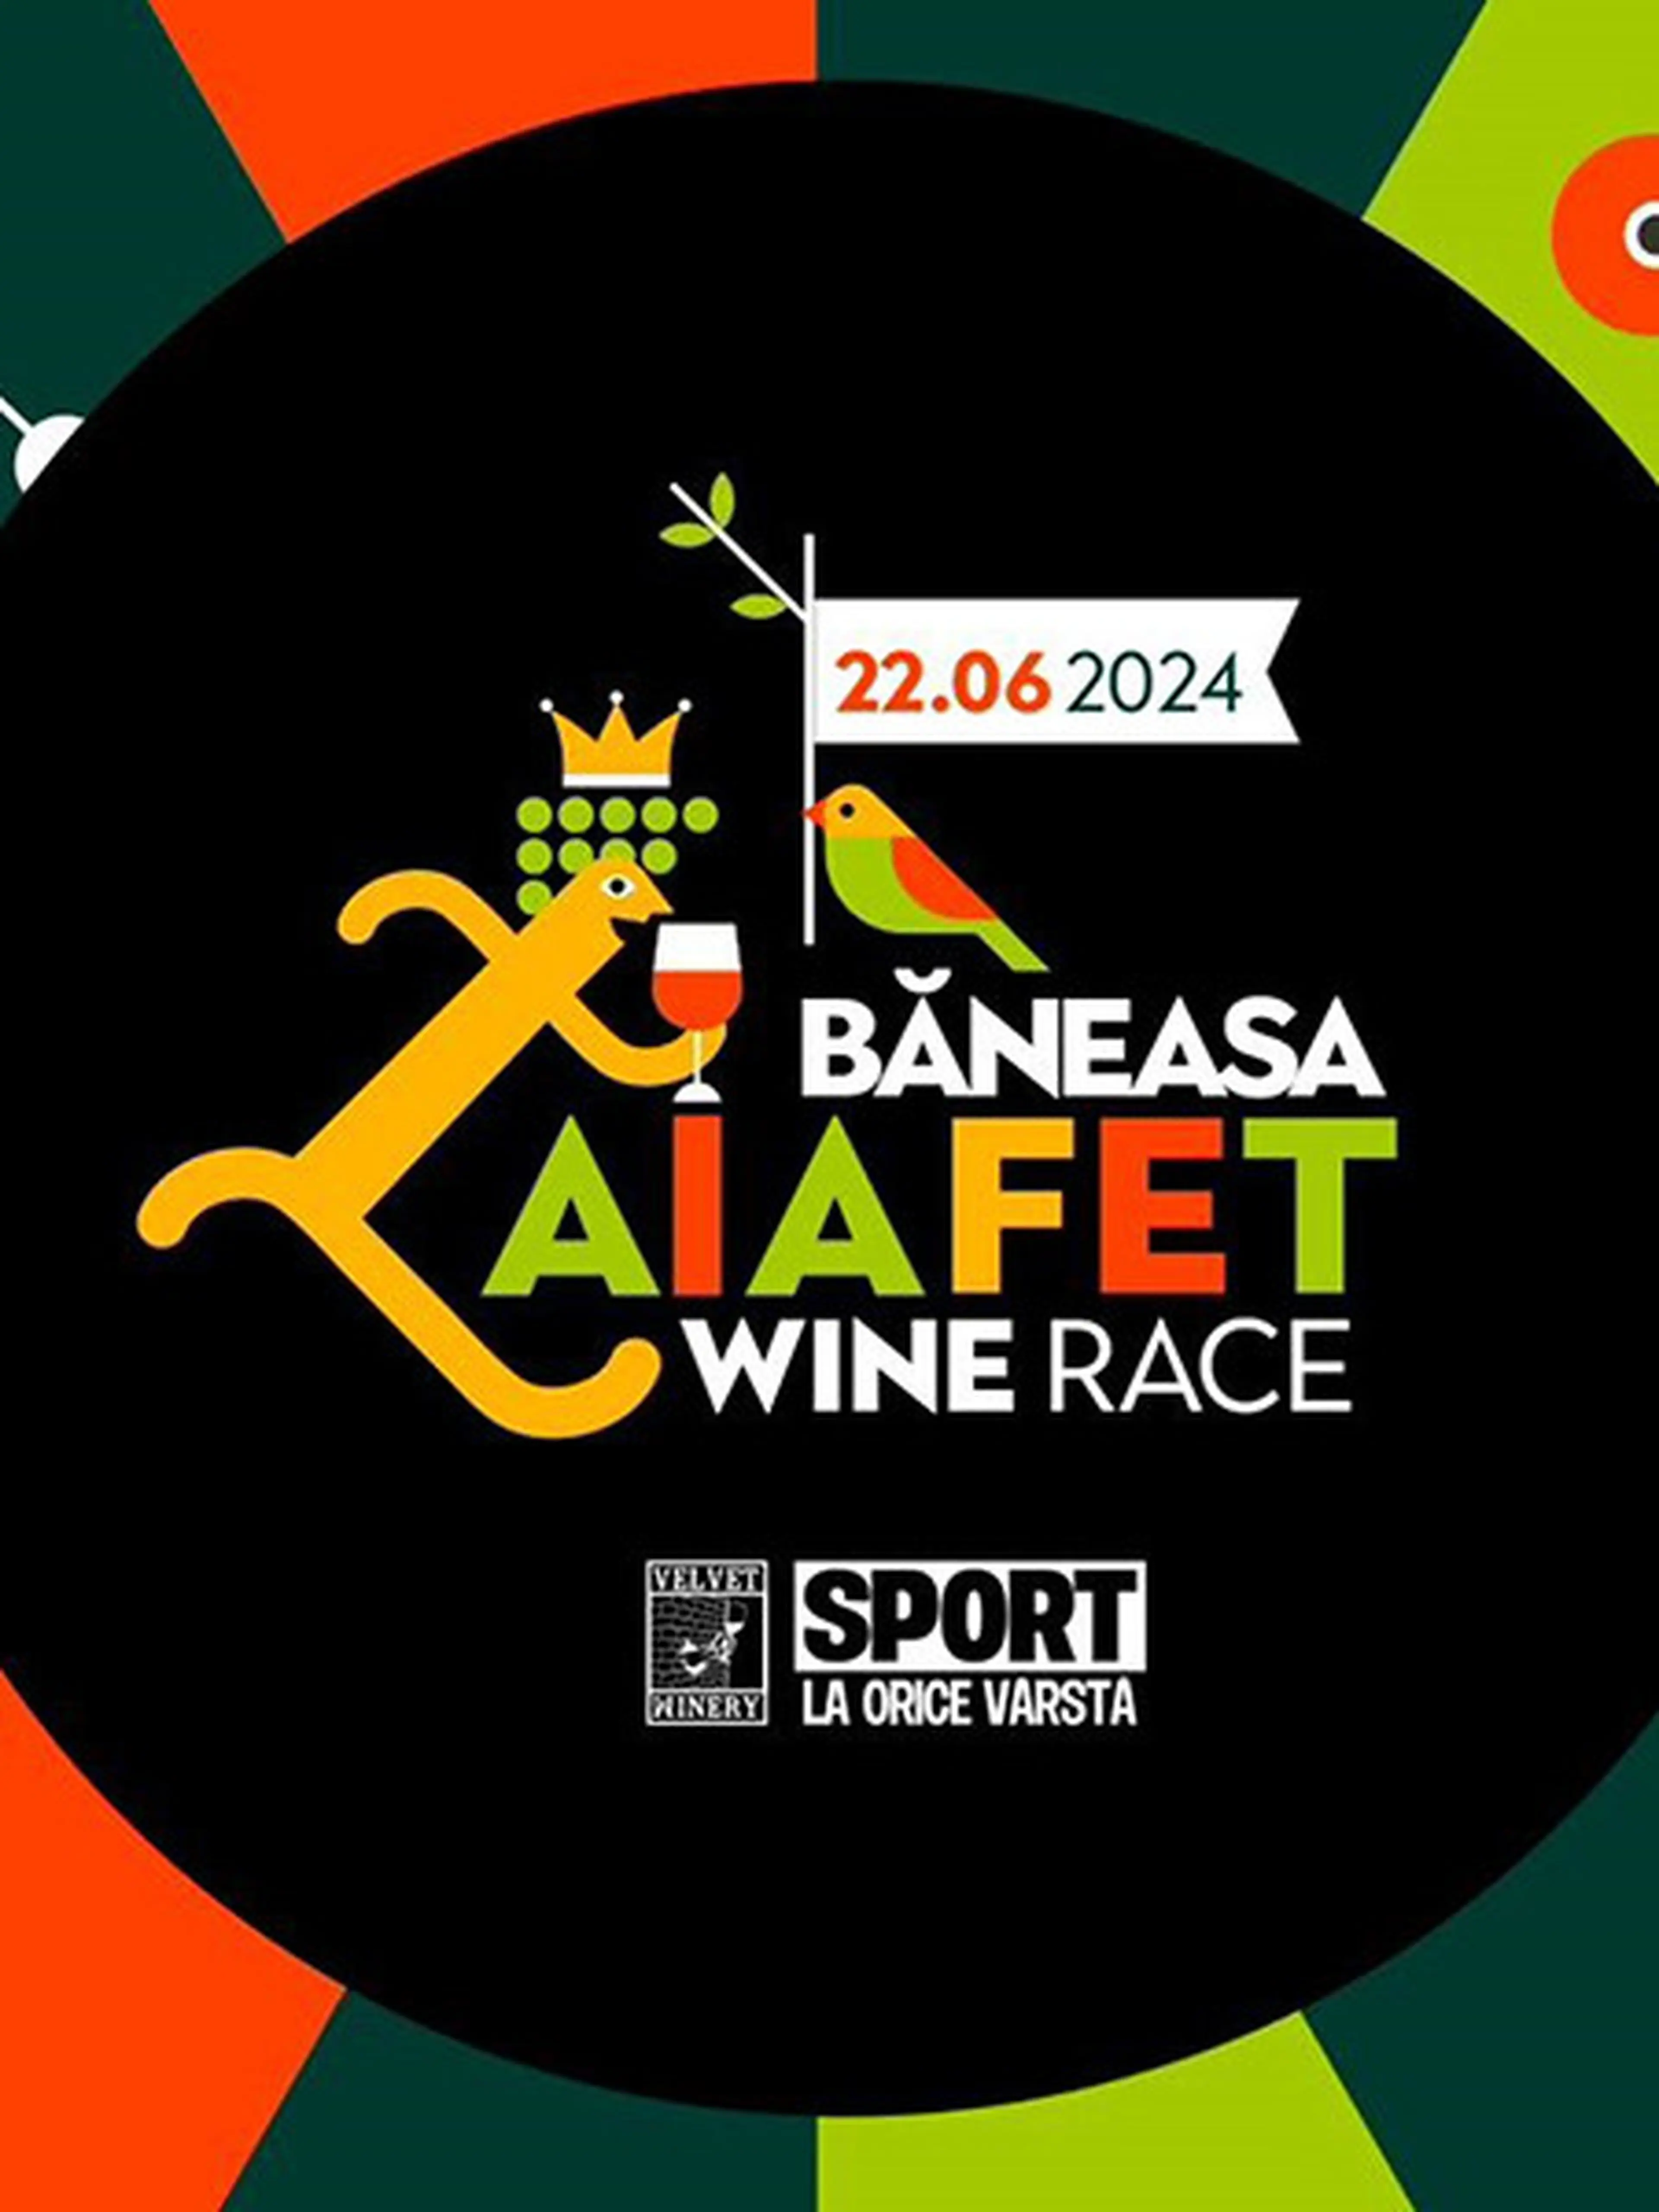 Zaiafet Wine Race 2024